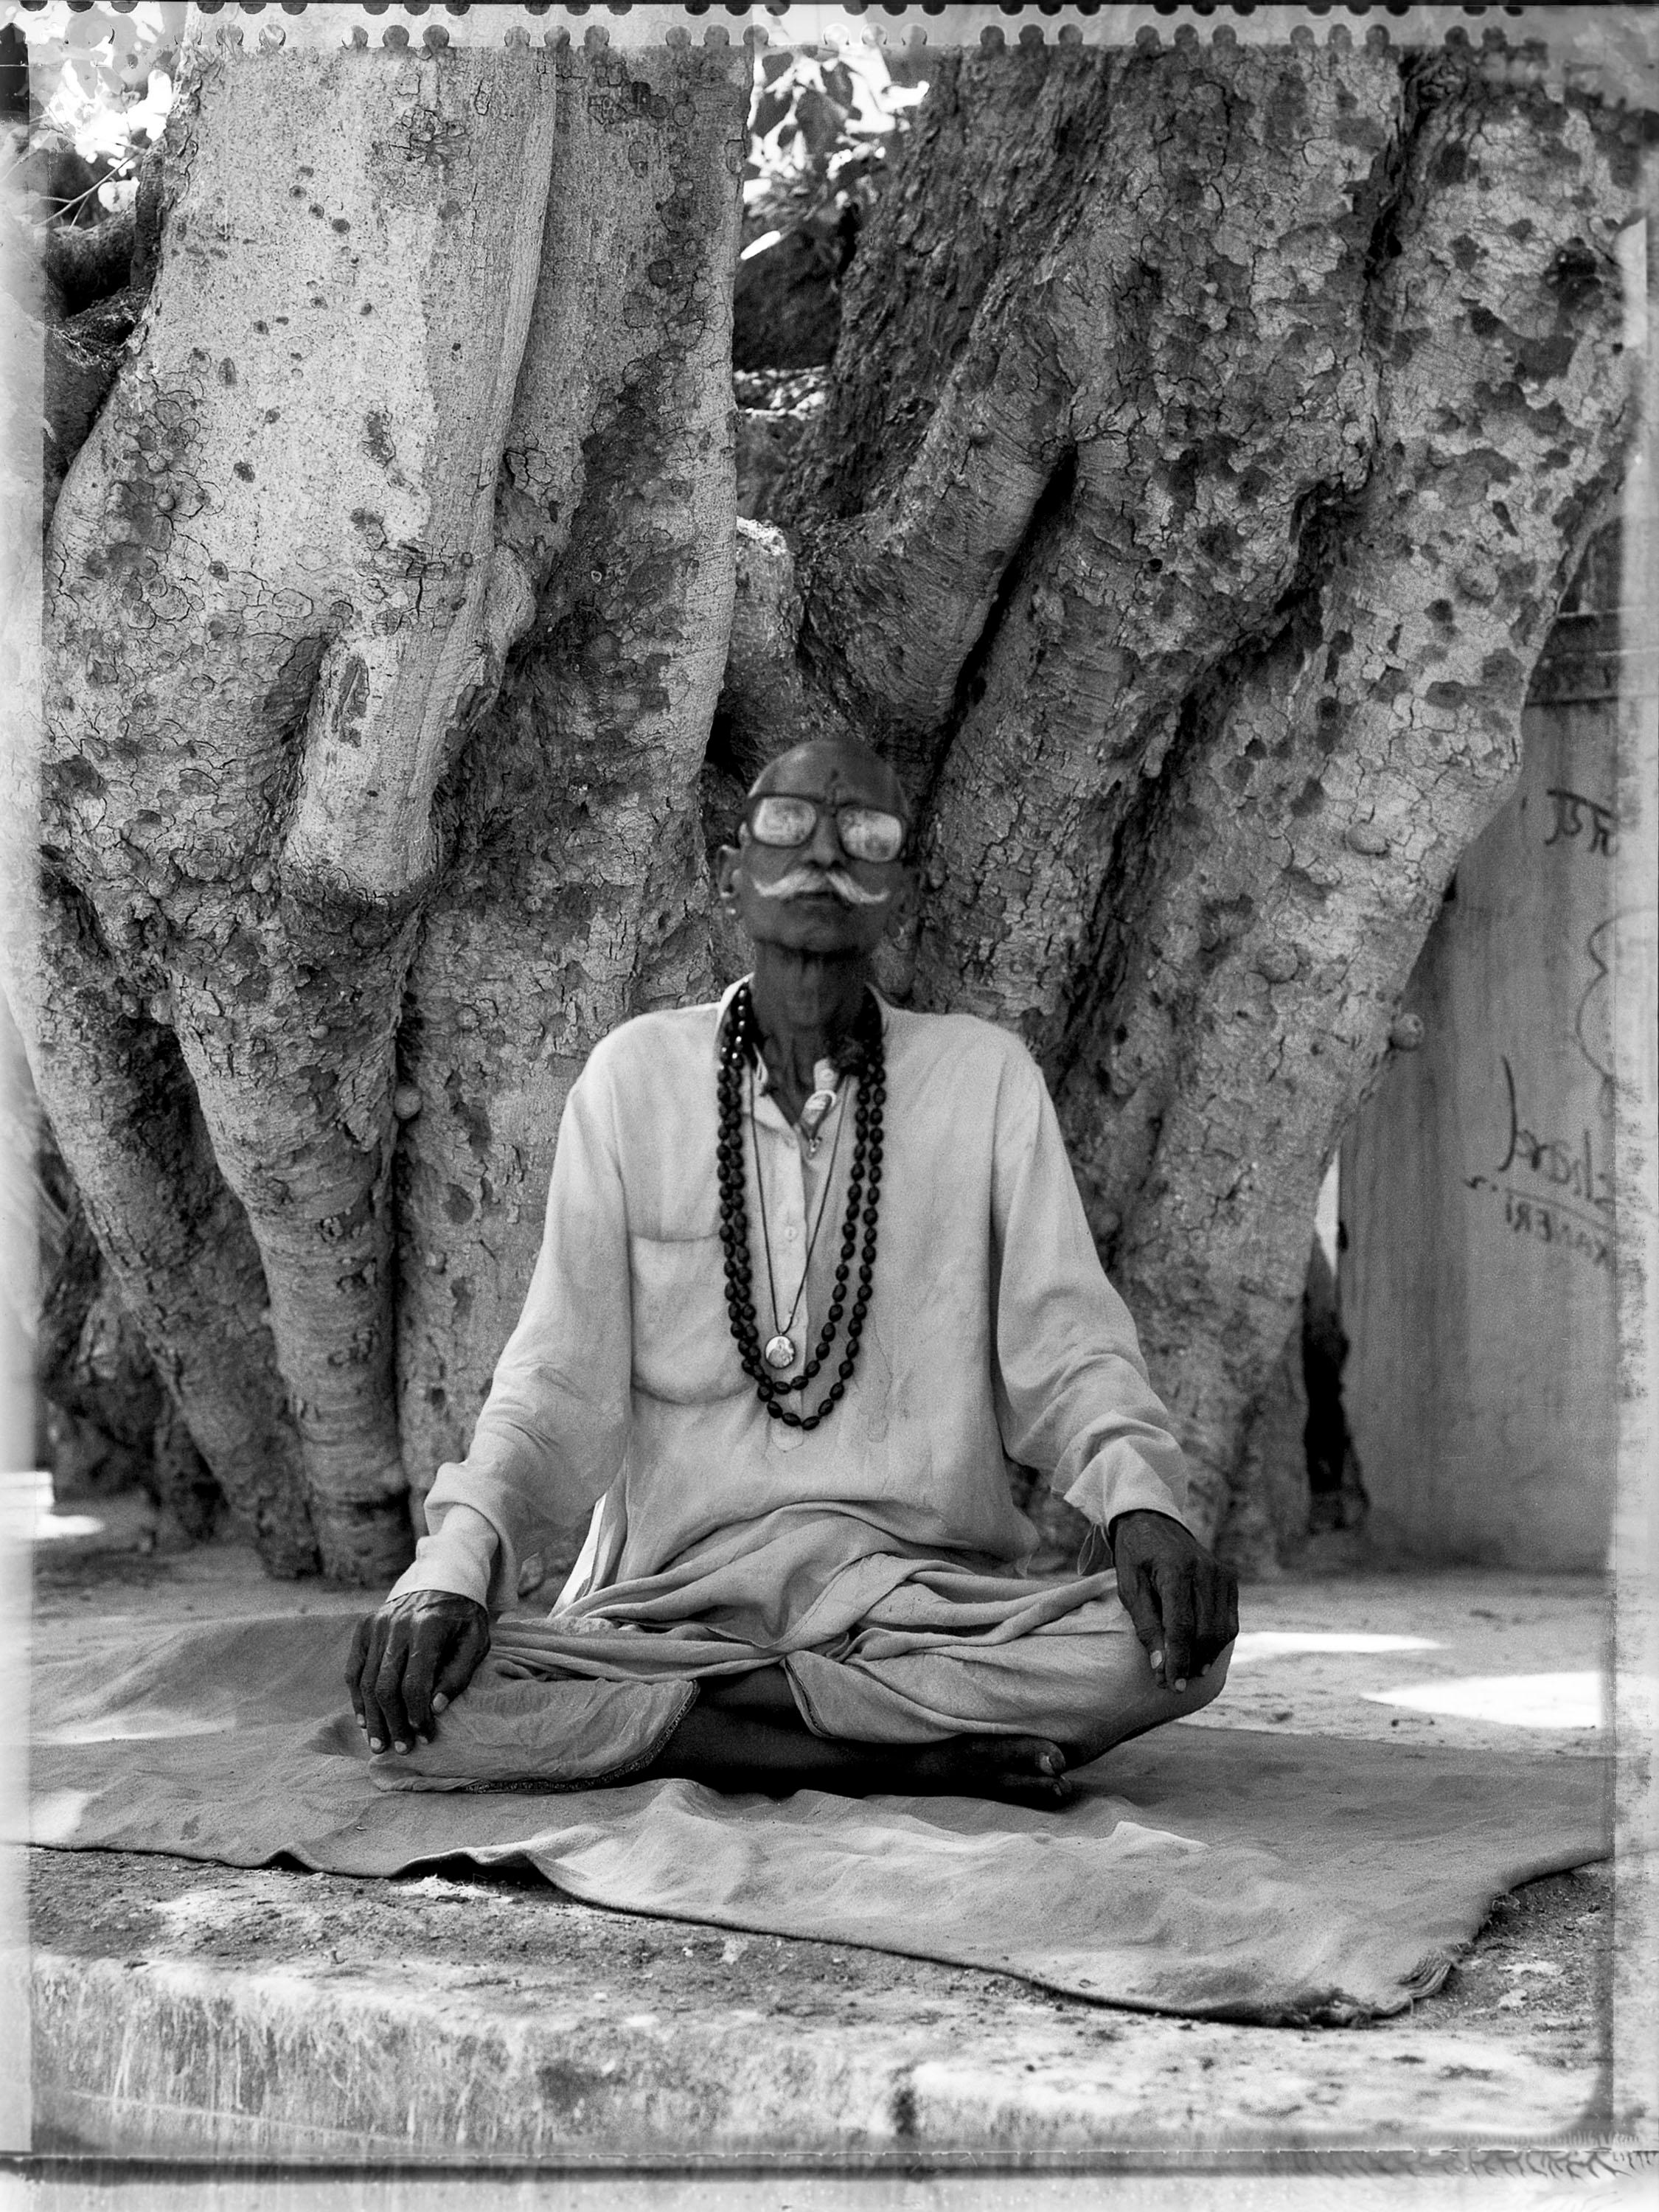 Carlo Bevilacqua Portrait Photograph - Mahatma - Rajastan -India (from Indian Stills series )